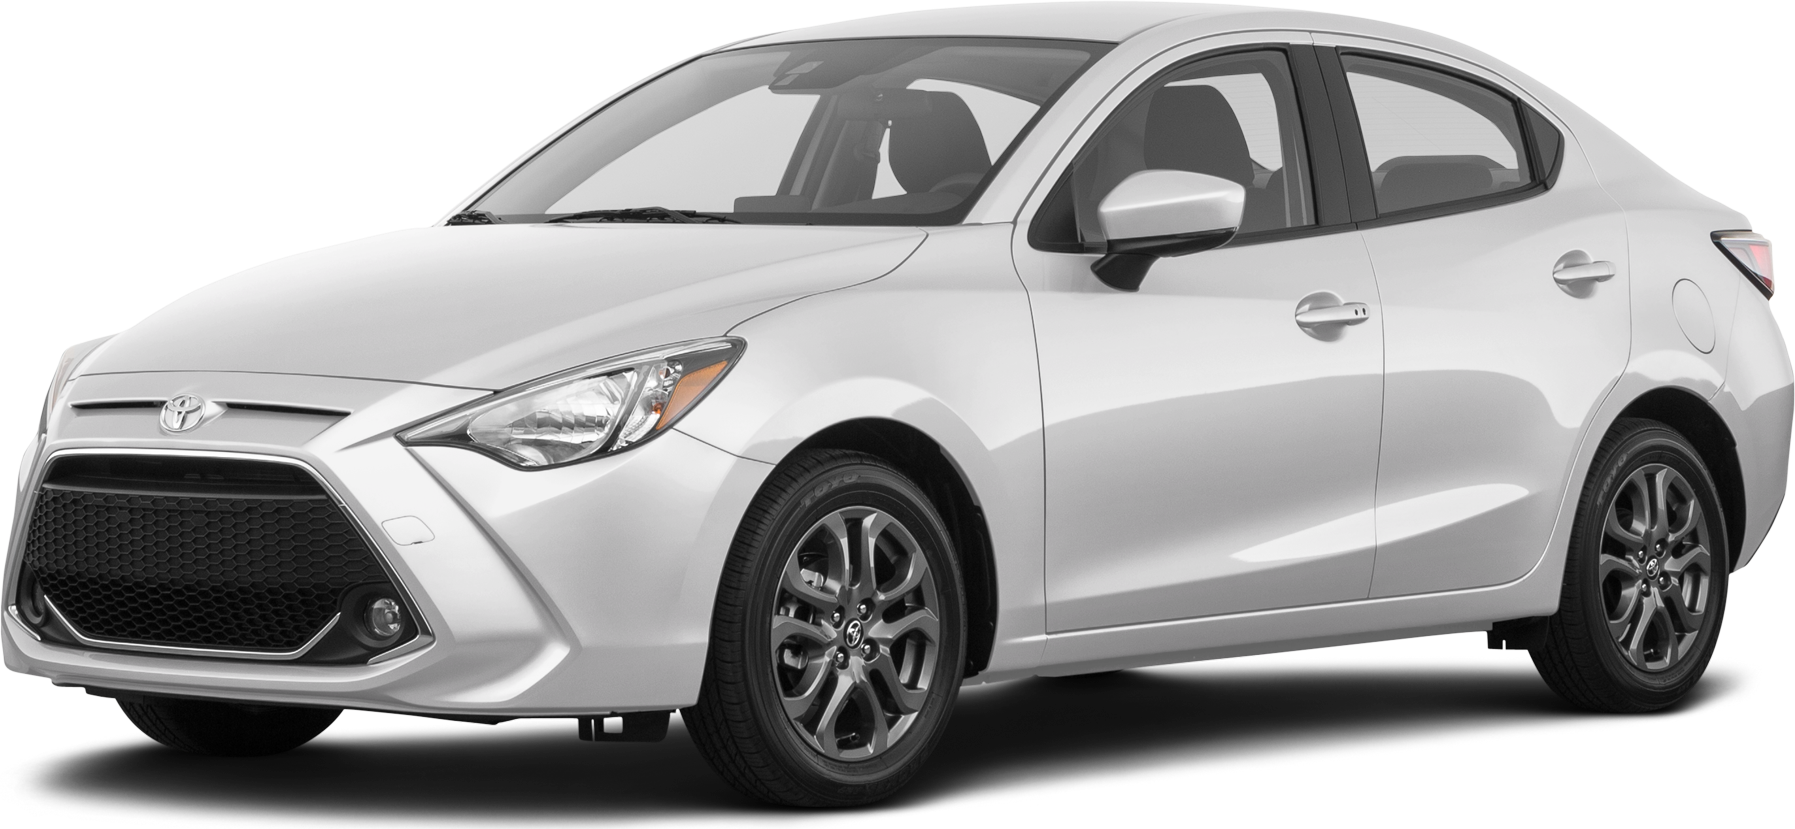 2020 Toyota Yaris Price, Value, Ratings & Reviews Kelley Blue Book